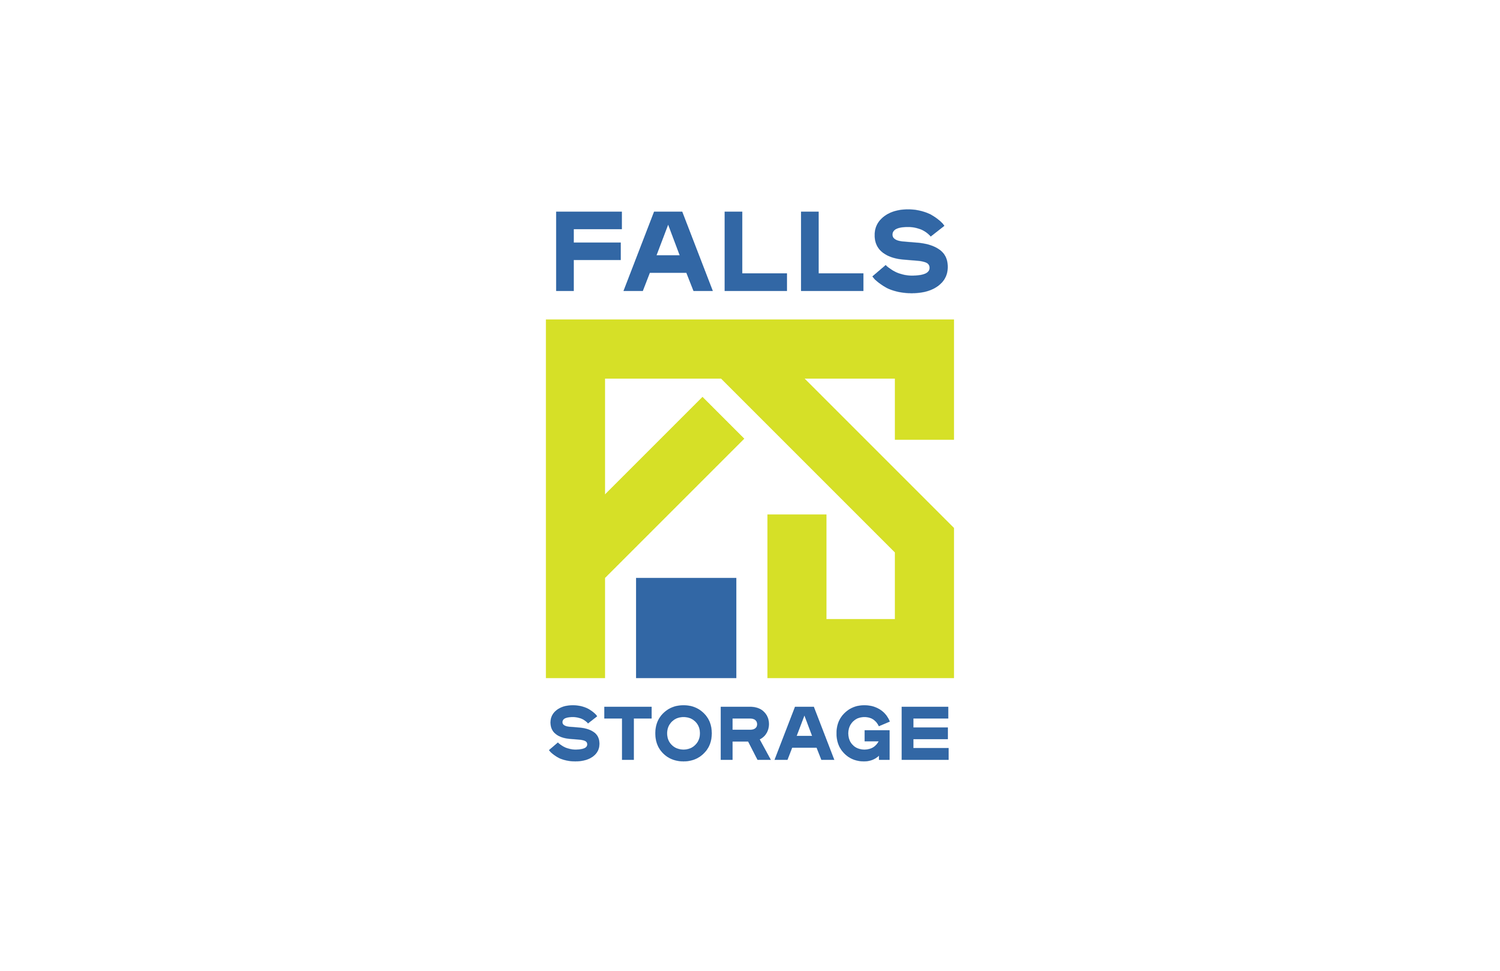 Falls Storage